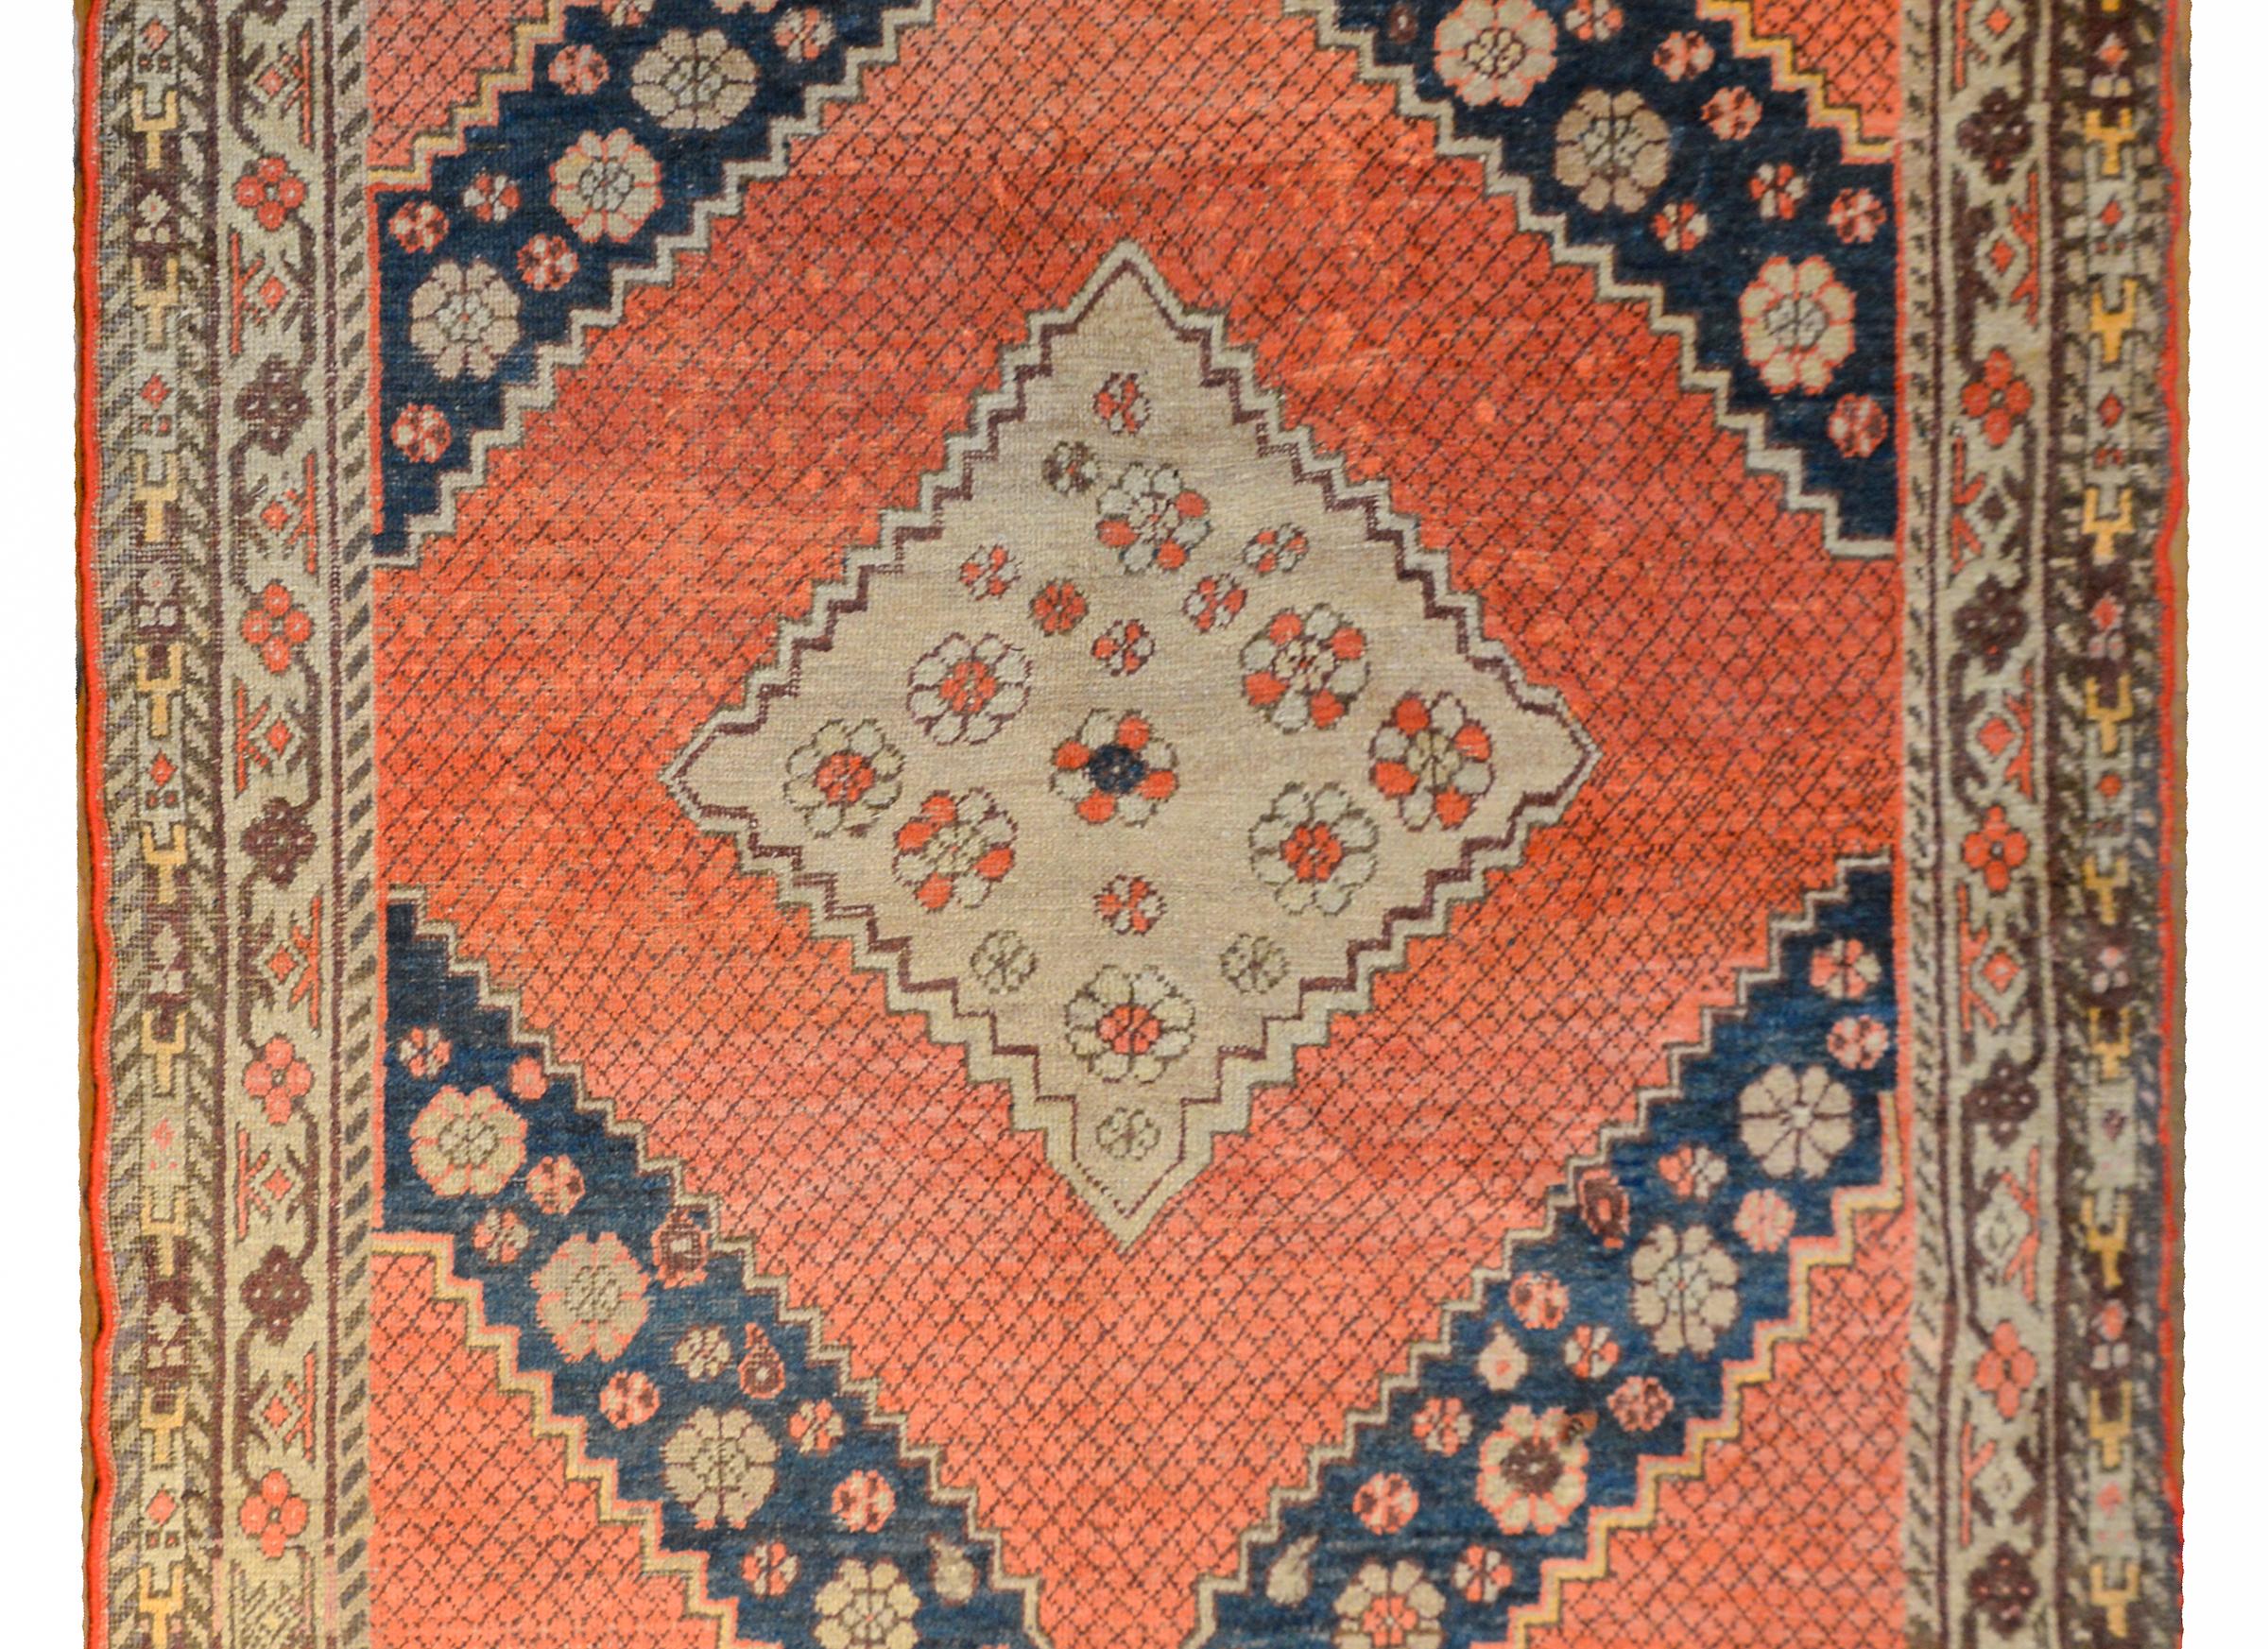 Khotan Mesmerizing Early 20th Century Samarkand Rug For Sale